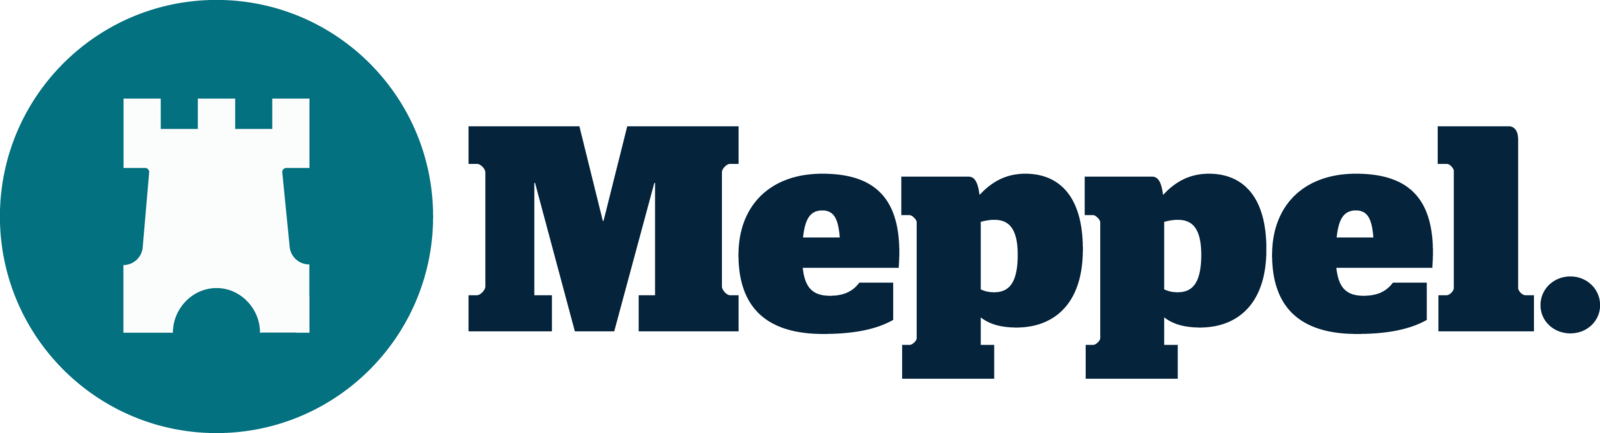 BusinessCenter Meppel